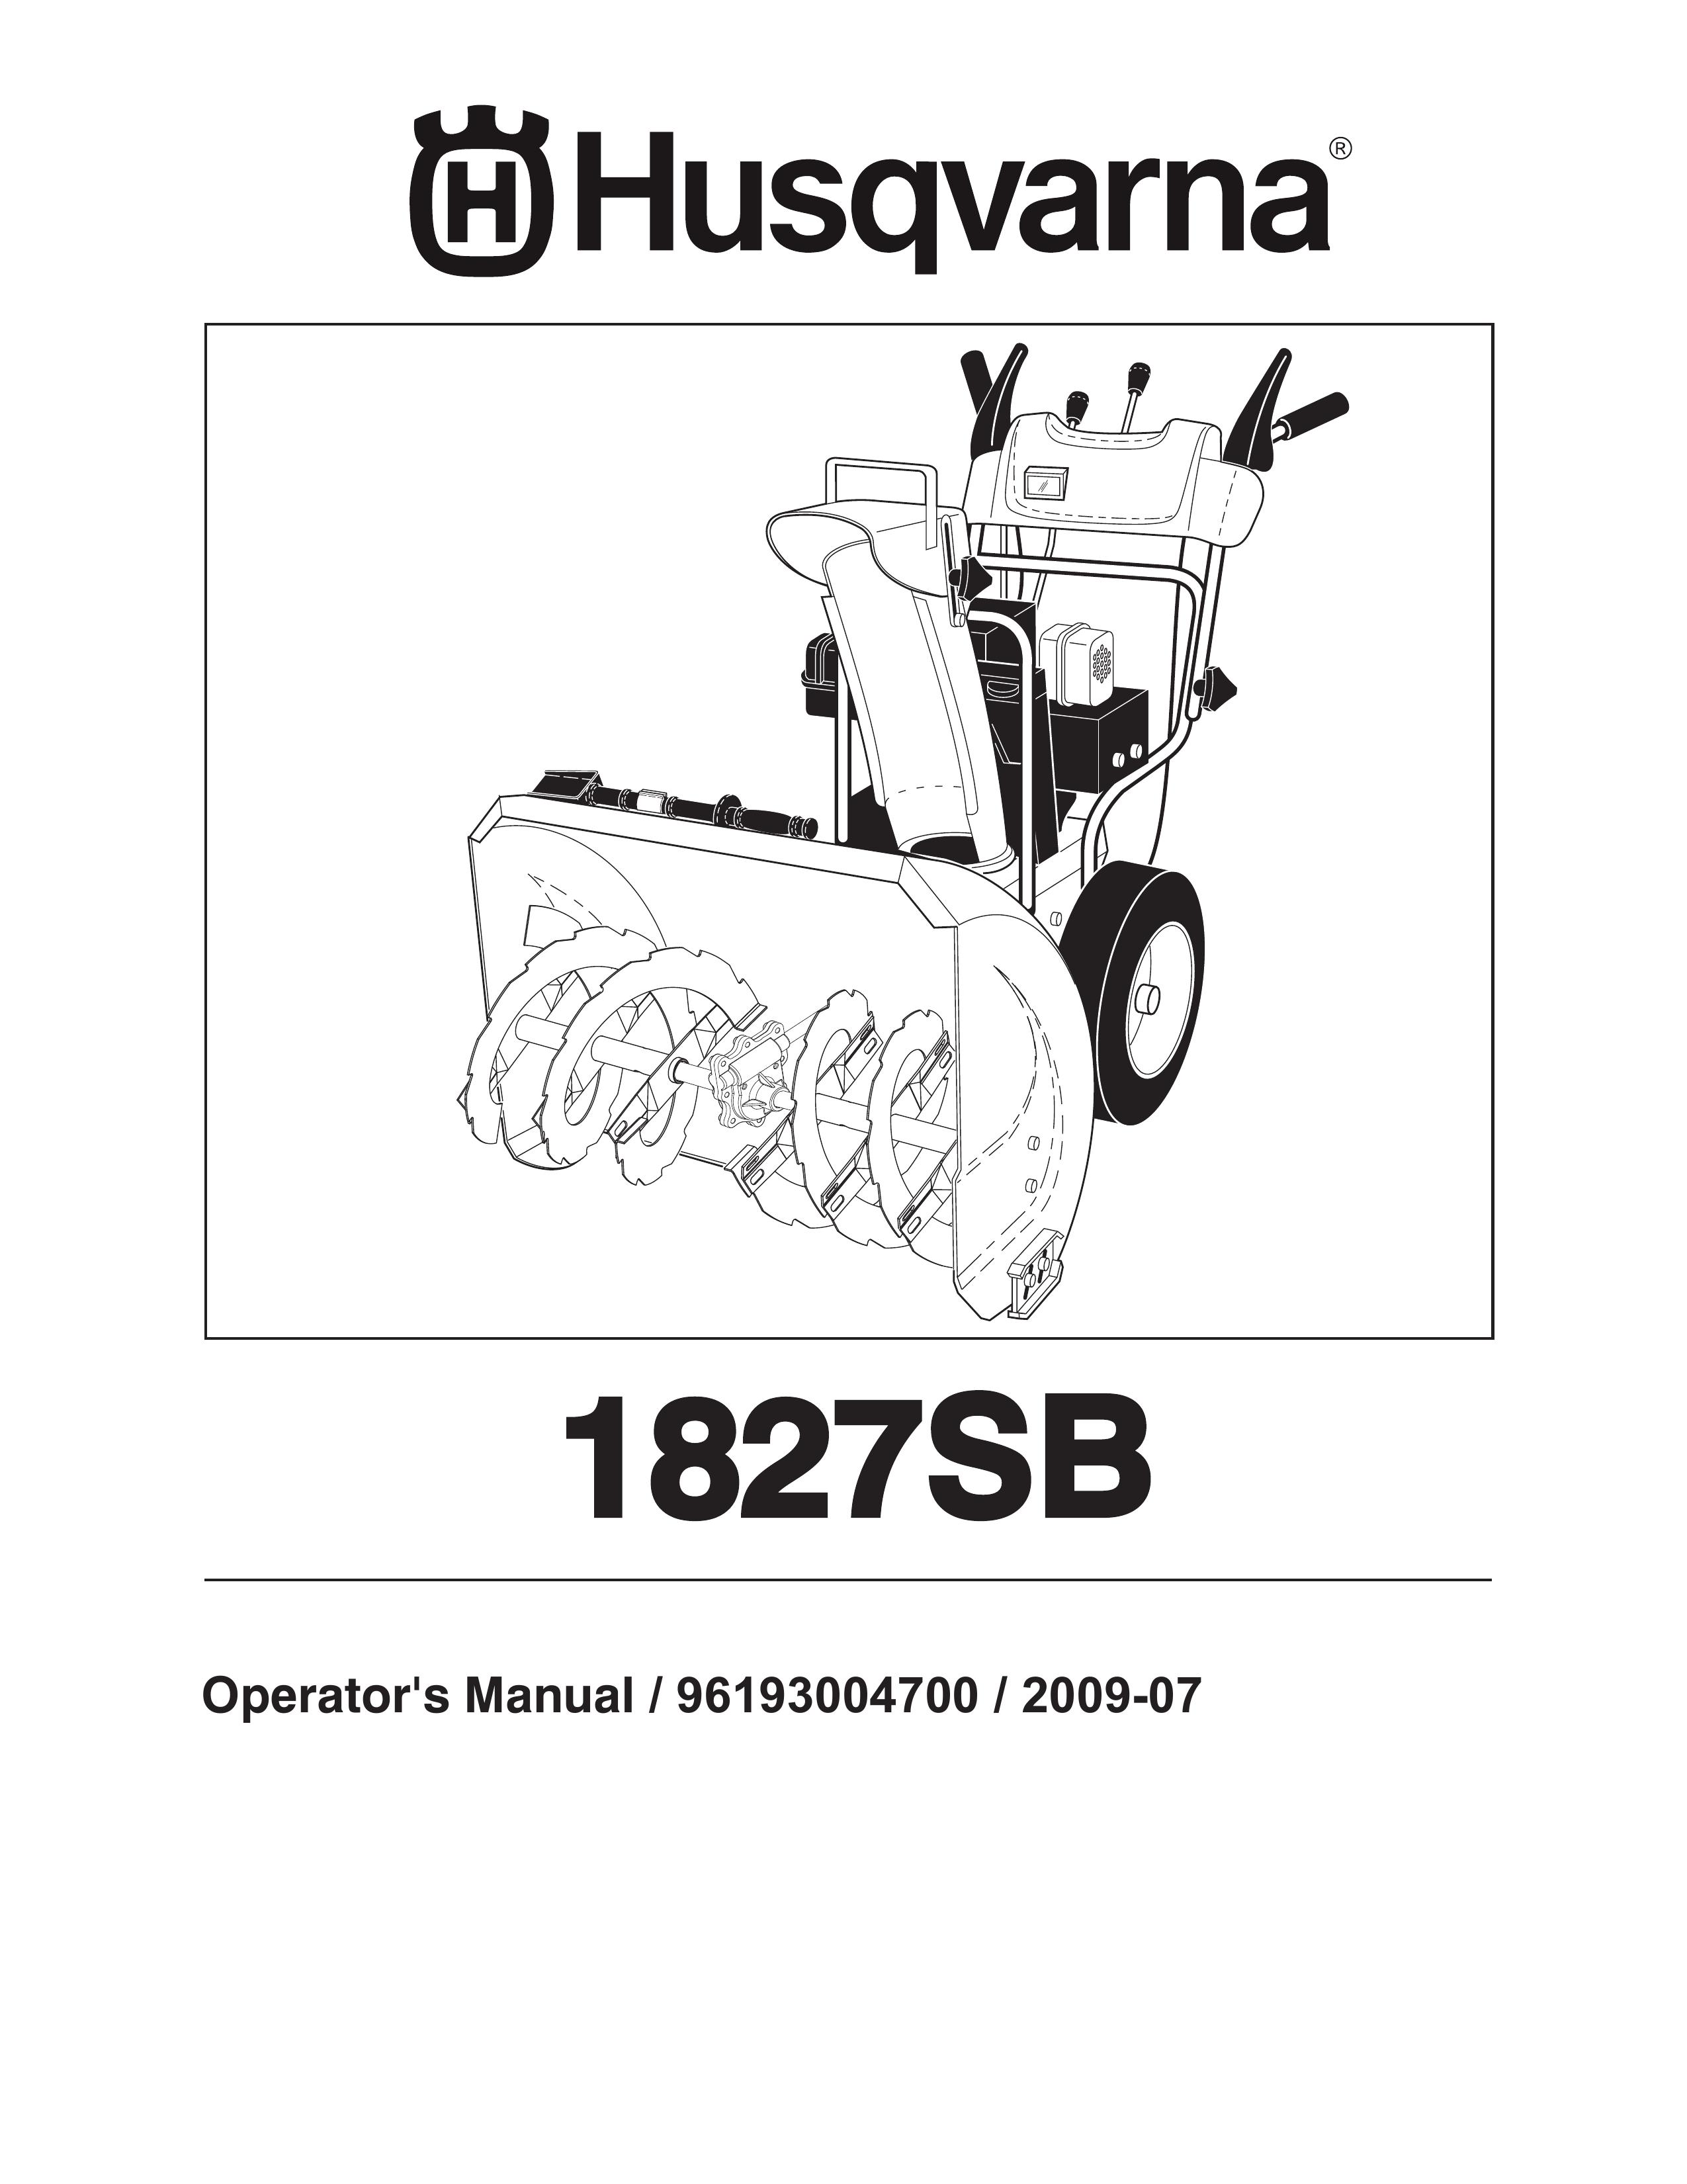 Husqvarna 1827SB Snow Blower User Manual